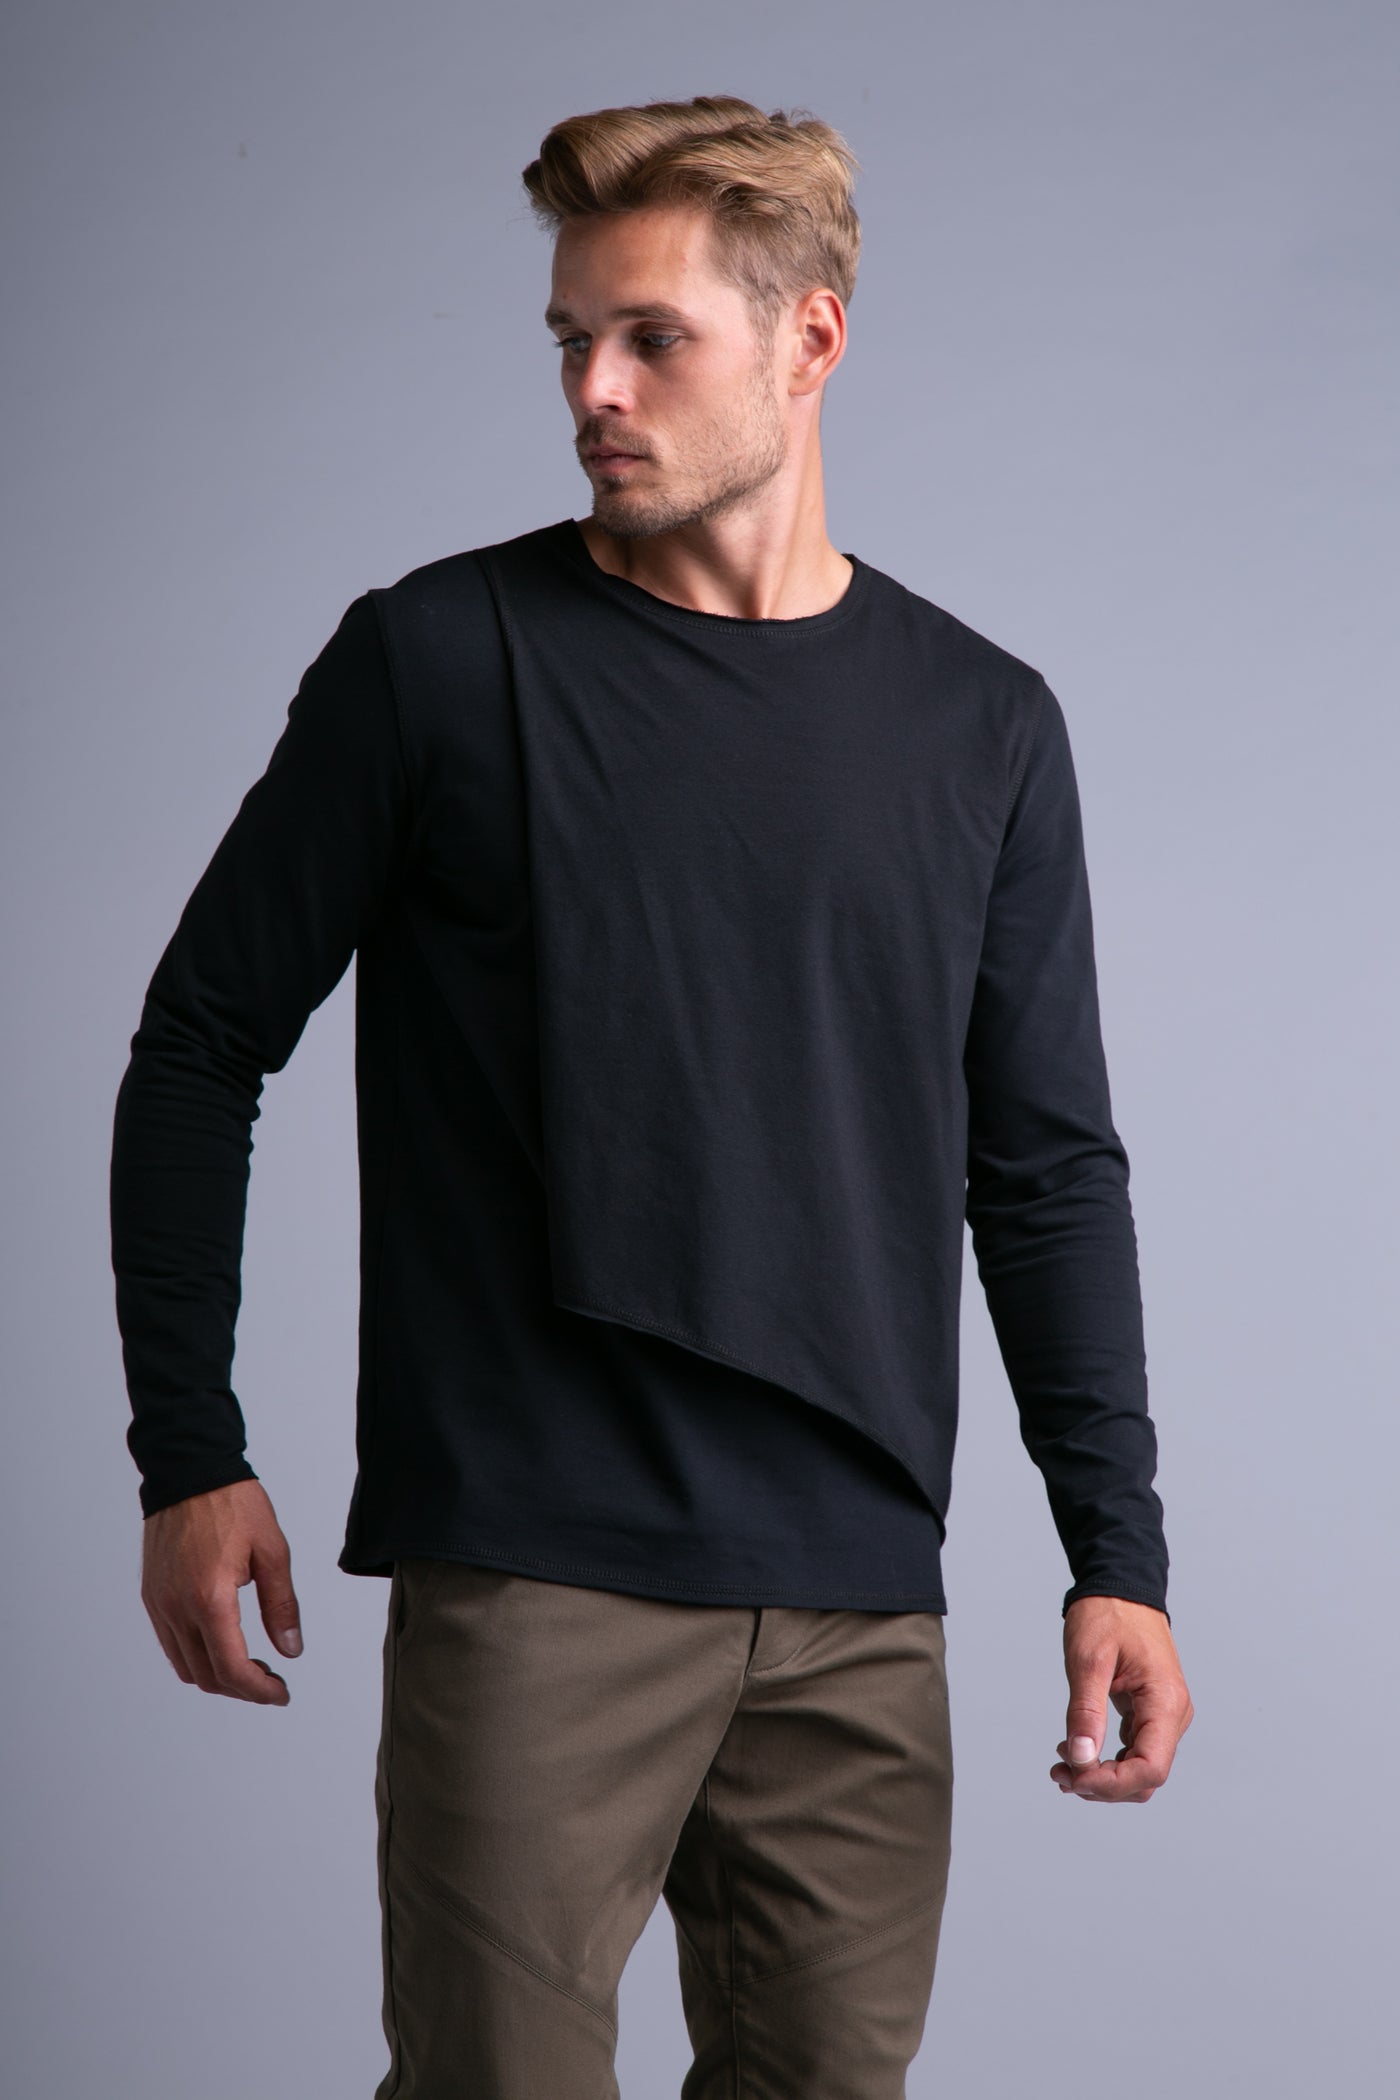 Layered shirt for men, long sleeves | Black